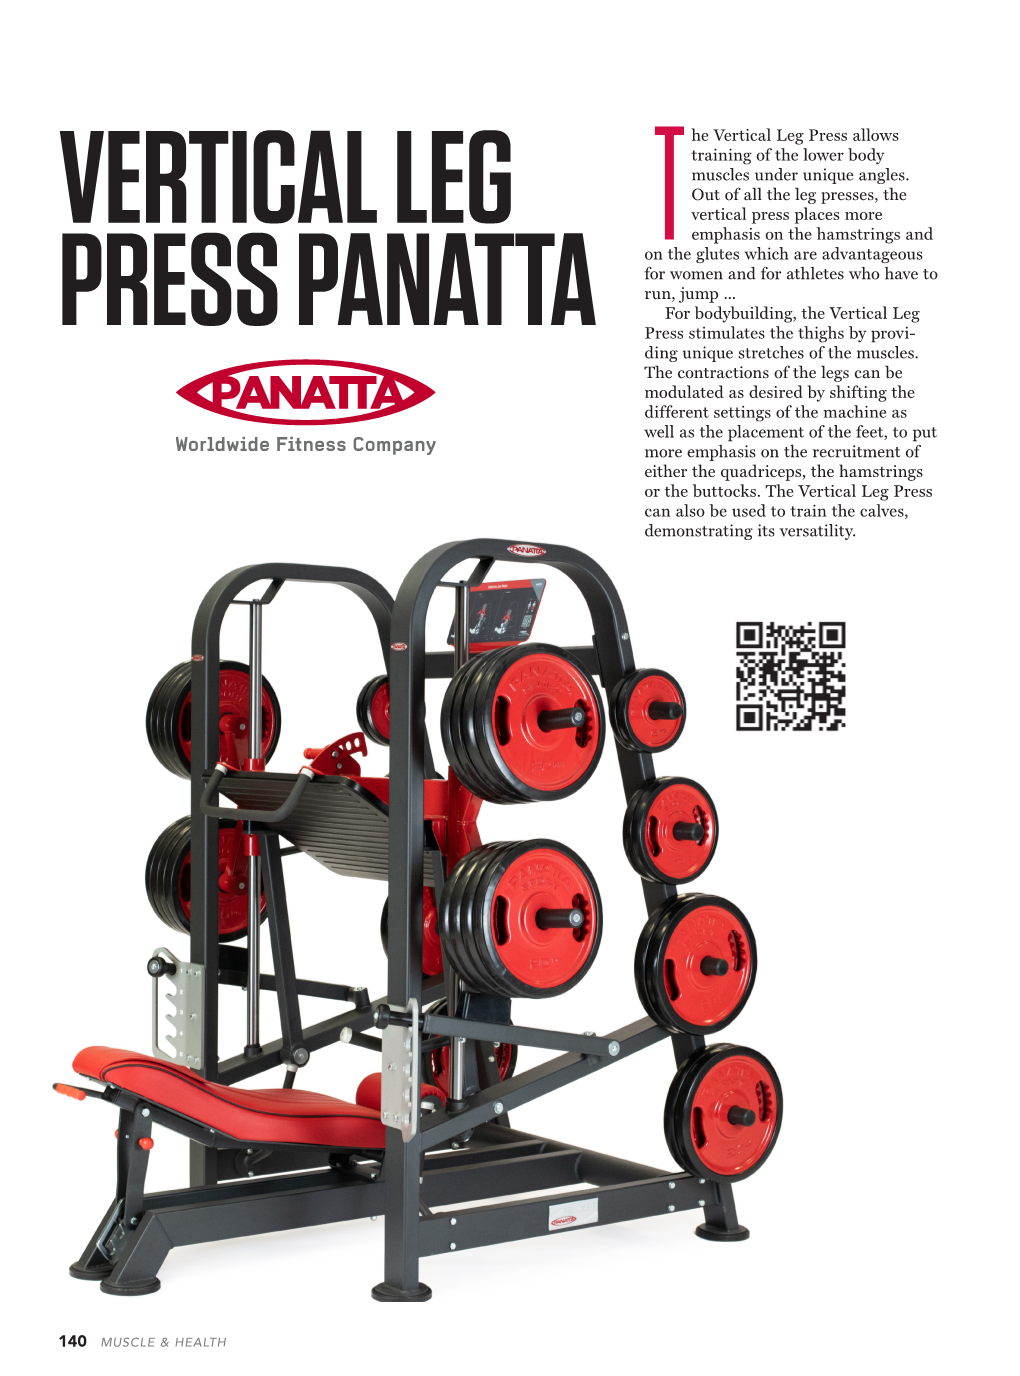 Panatta's Vertical Leg Press